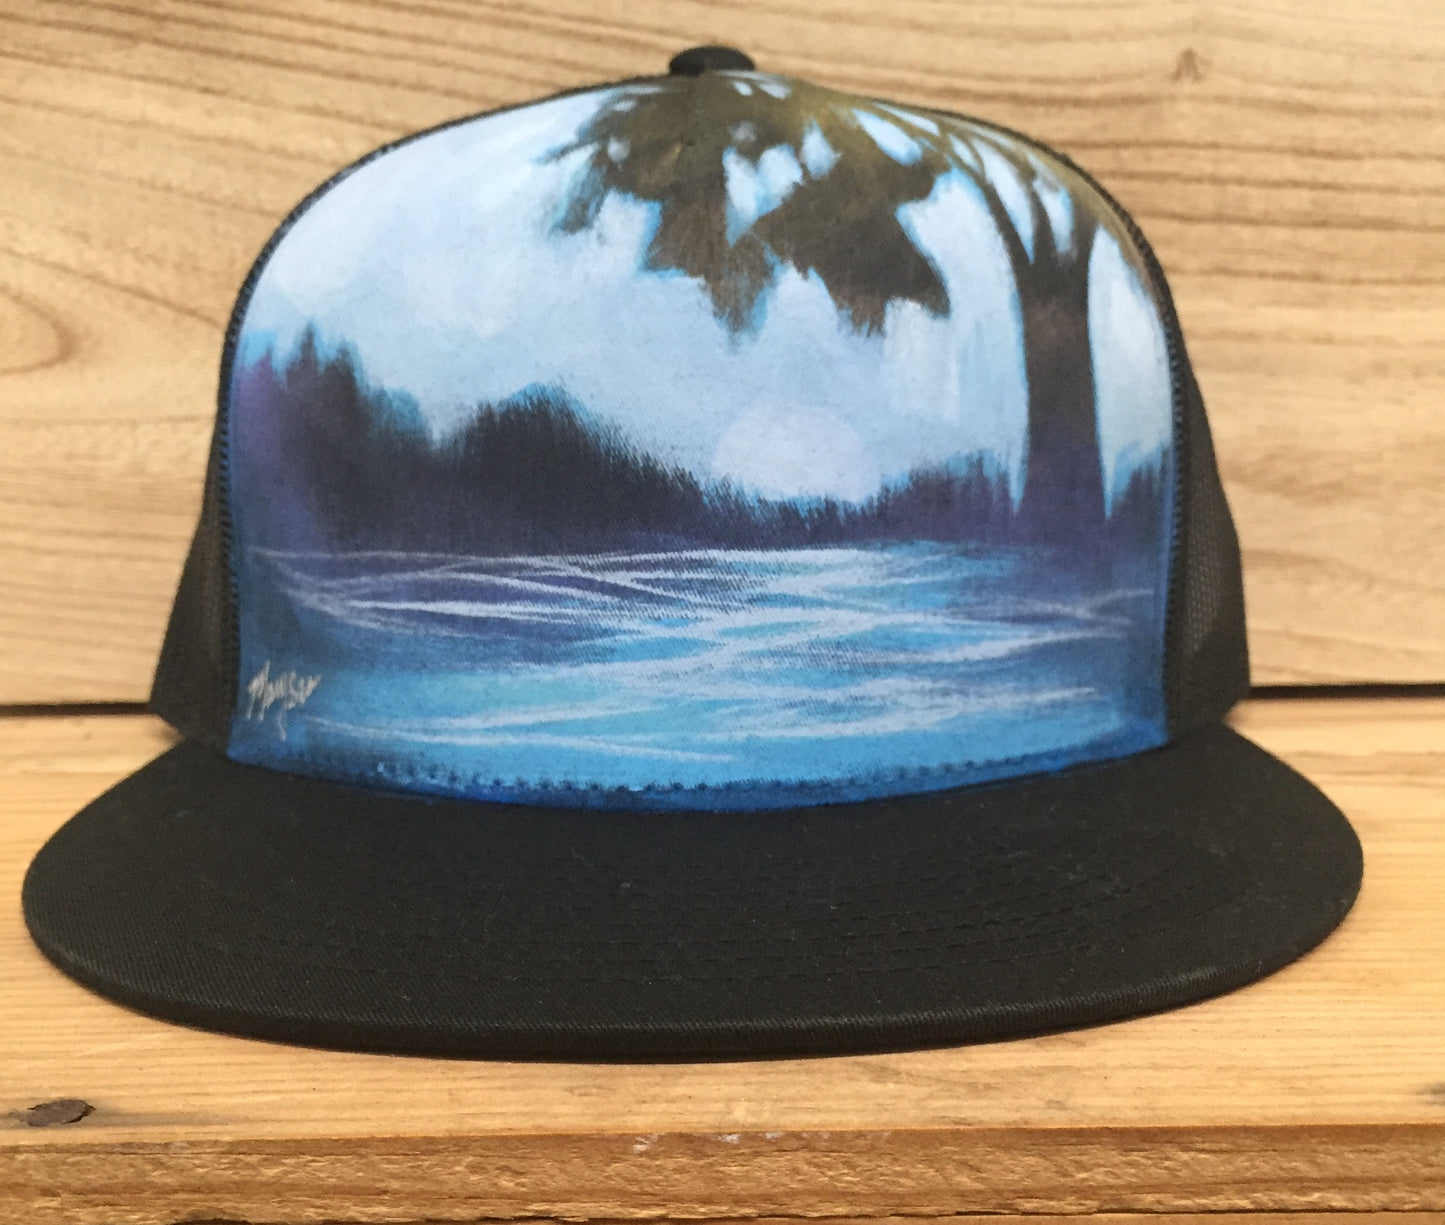 "Evening Lake" Hand Painted on Black Snapback Trucker Hat